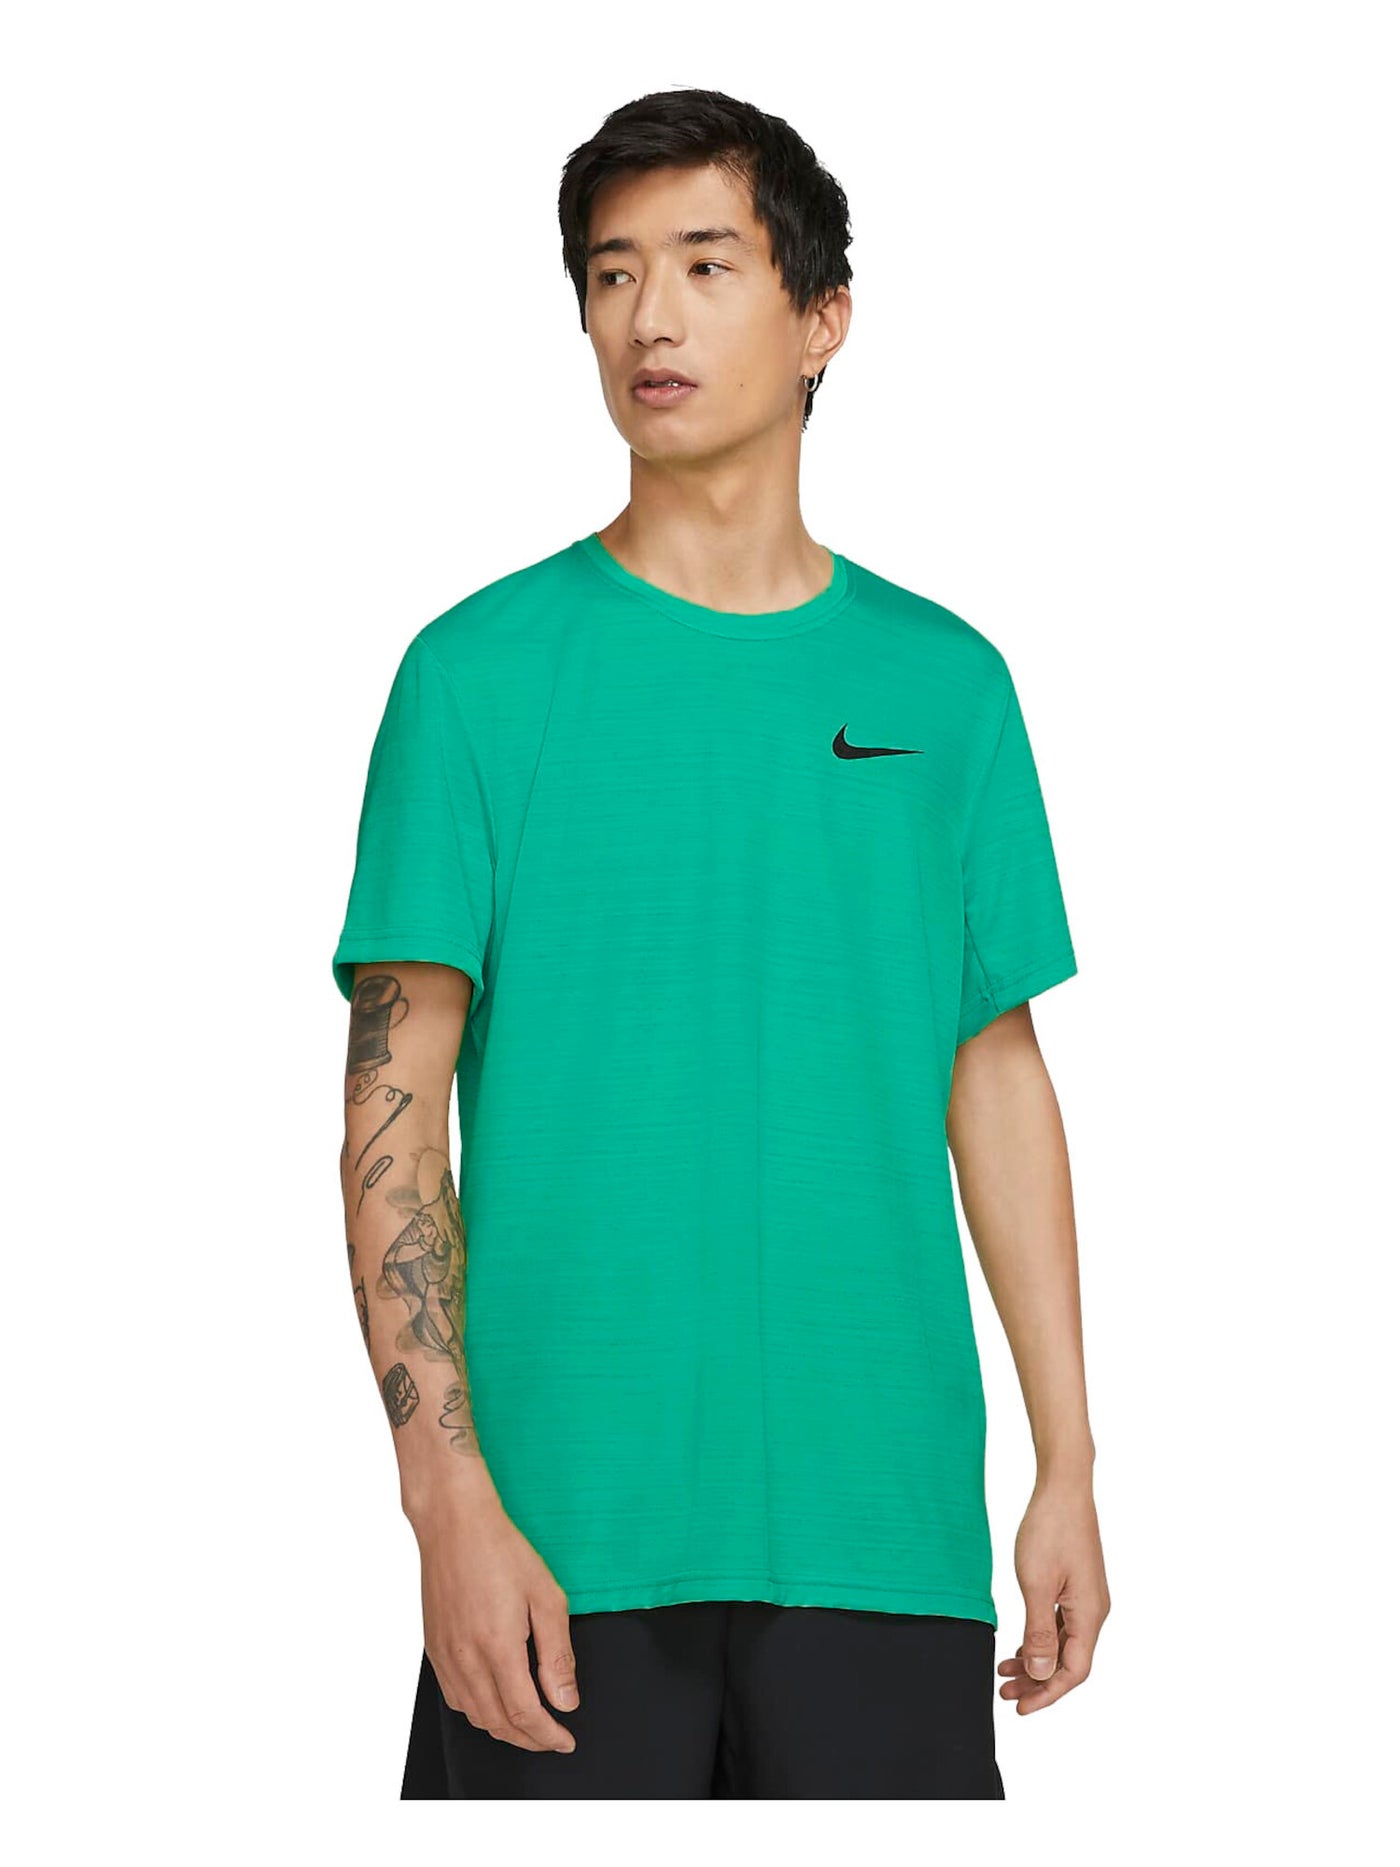 NIKE Mens Superset Breathe Green Lightweight, Logo Graphic Classic Fit Moisture Wicking T-Shirt S